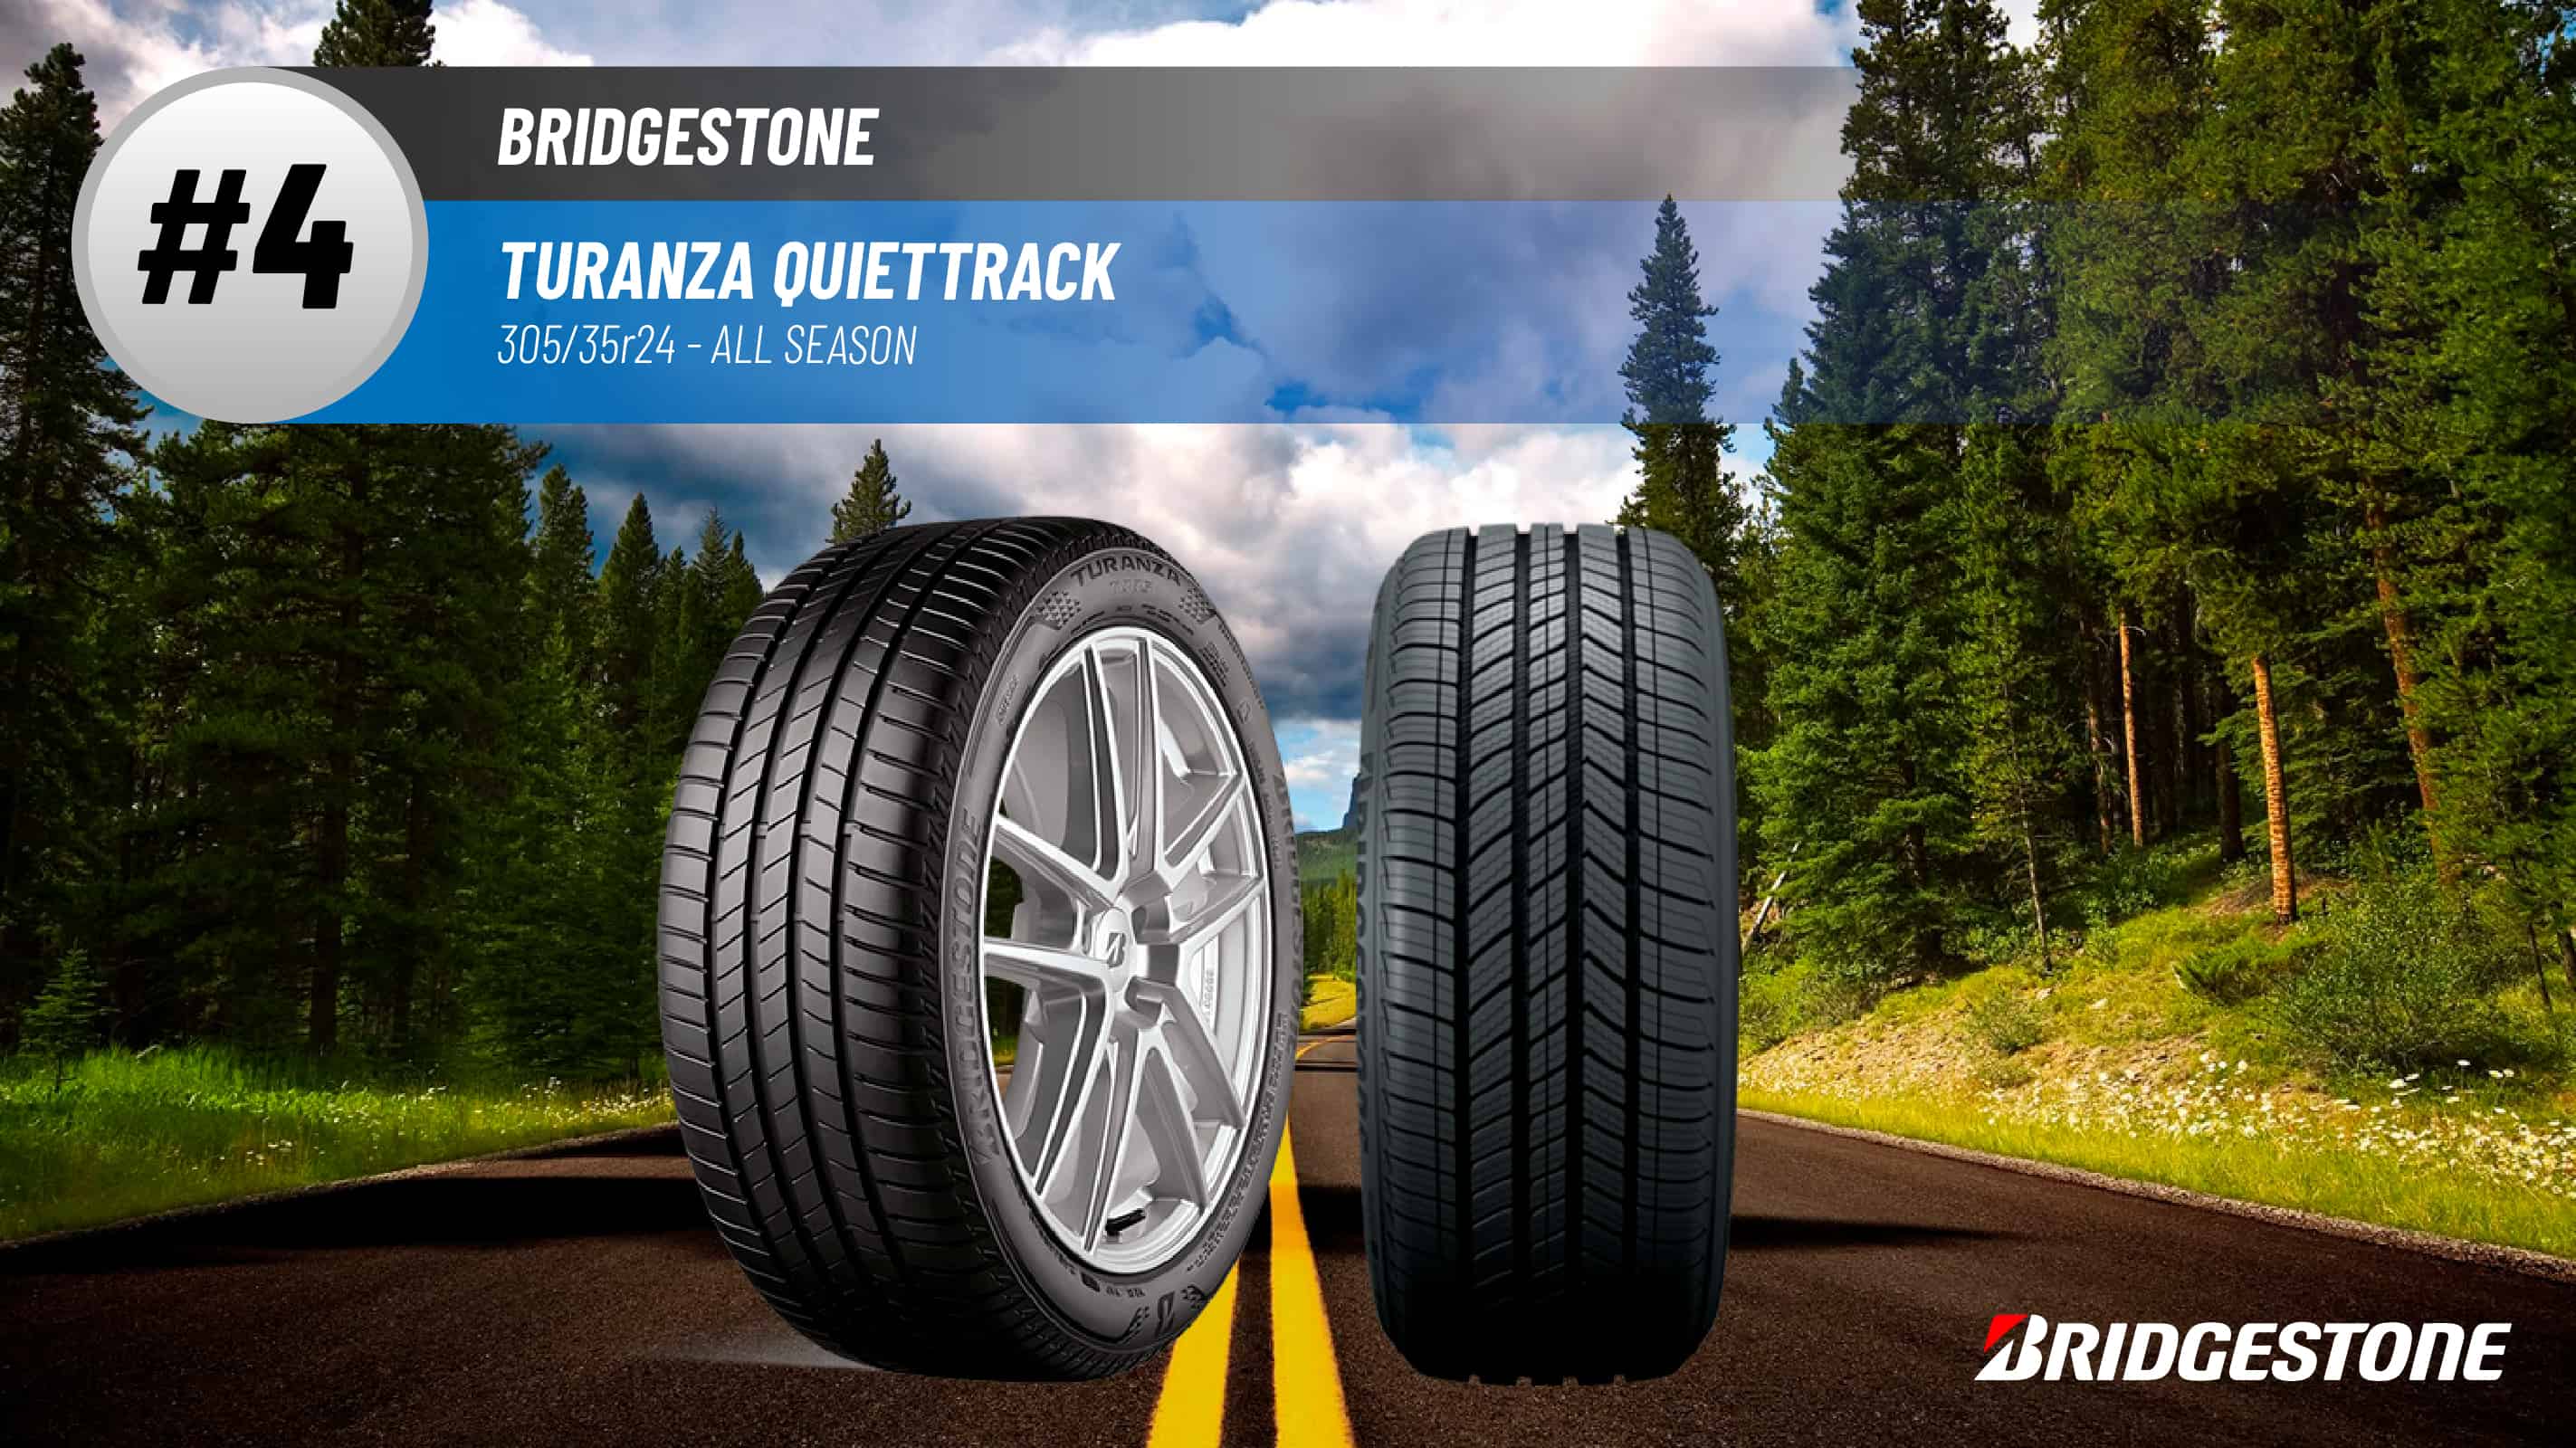 Top #4 All Season Tires: Bridgestone Turanza Quiettrack – 305/35R24